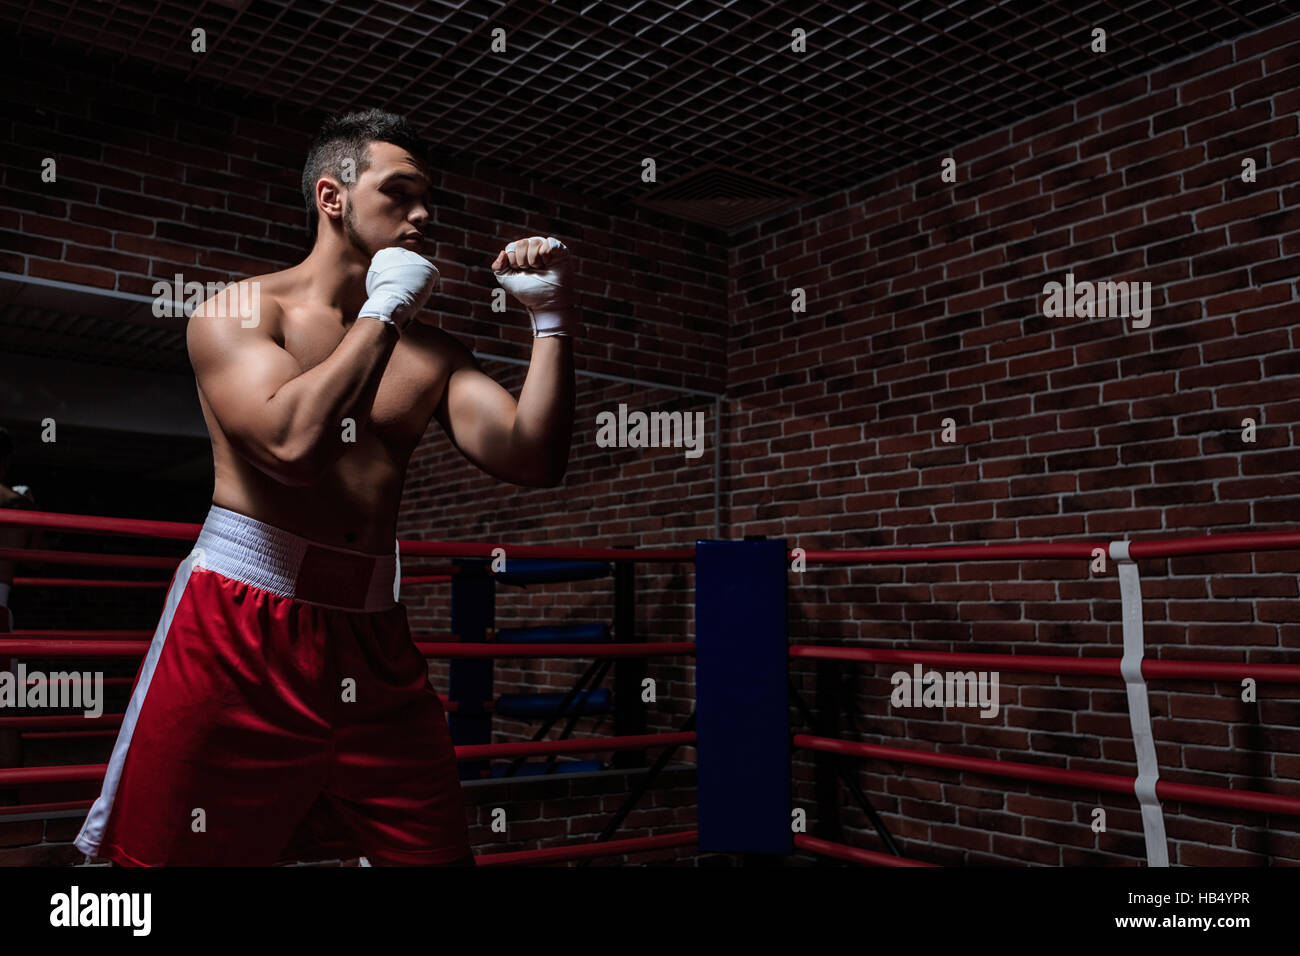 Boxing ring Stock Photo